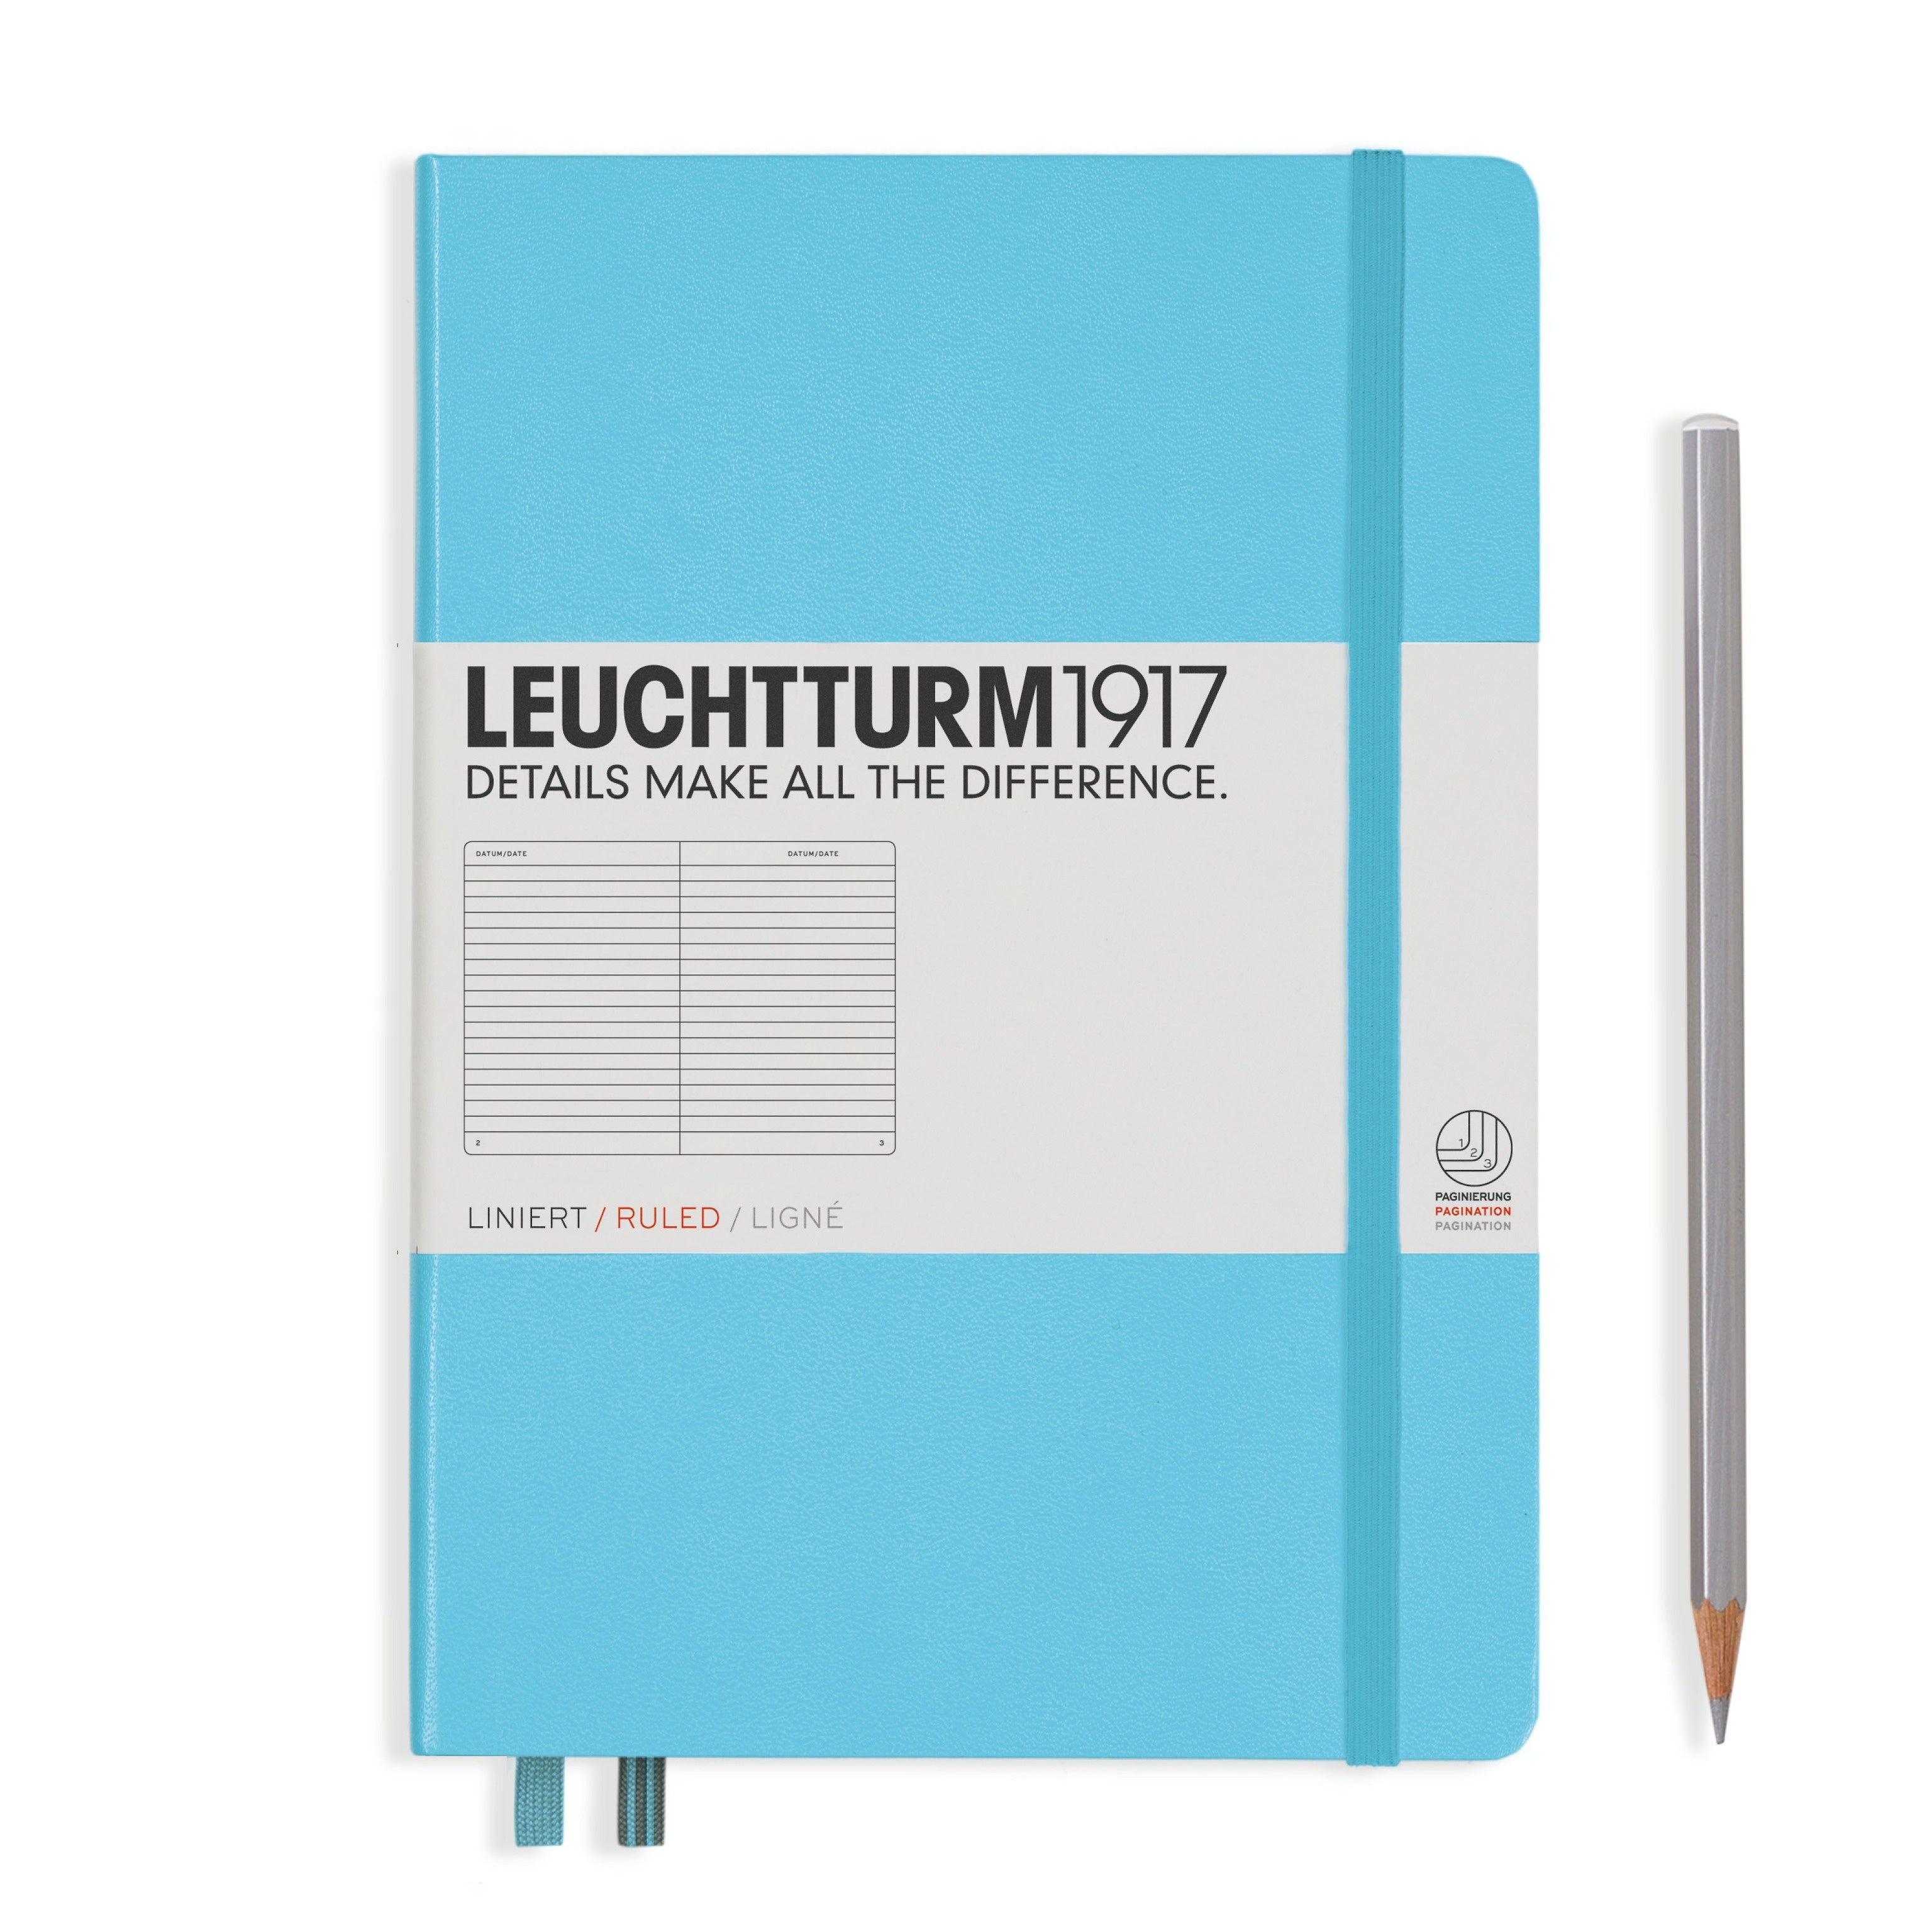 Leuchtturm1917 Notebook Medium (A5) Ruled Ice Blue - Pencraft the boutique